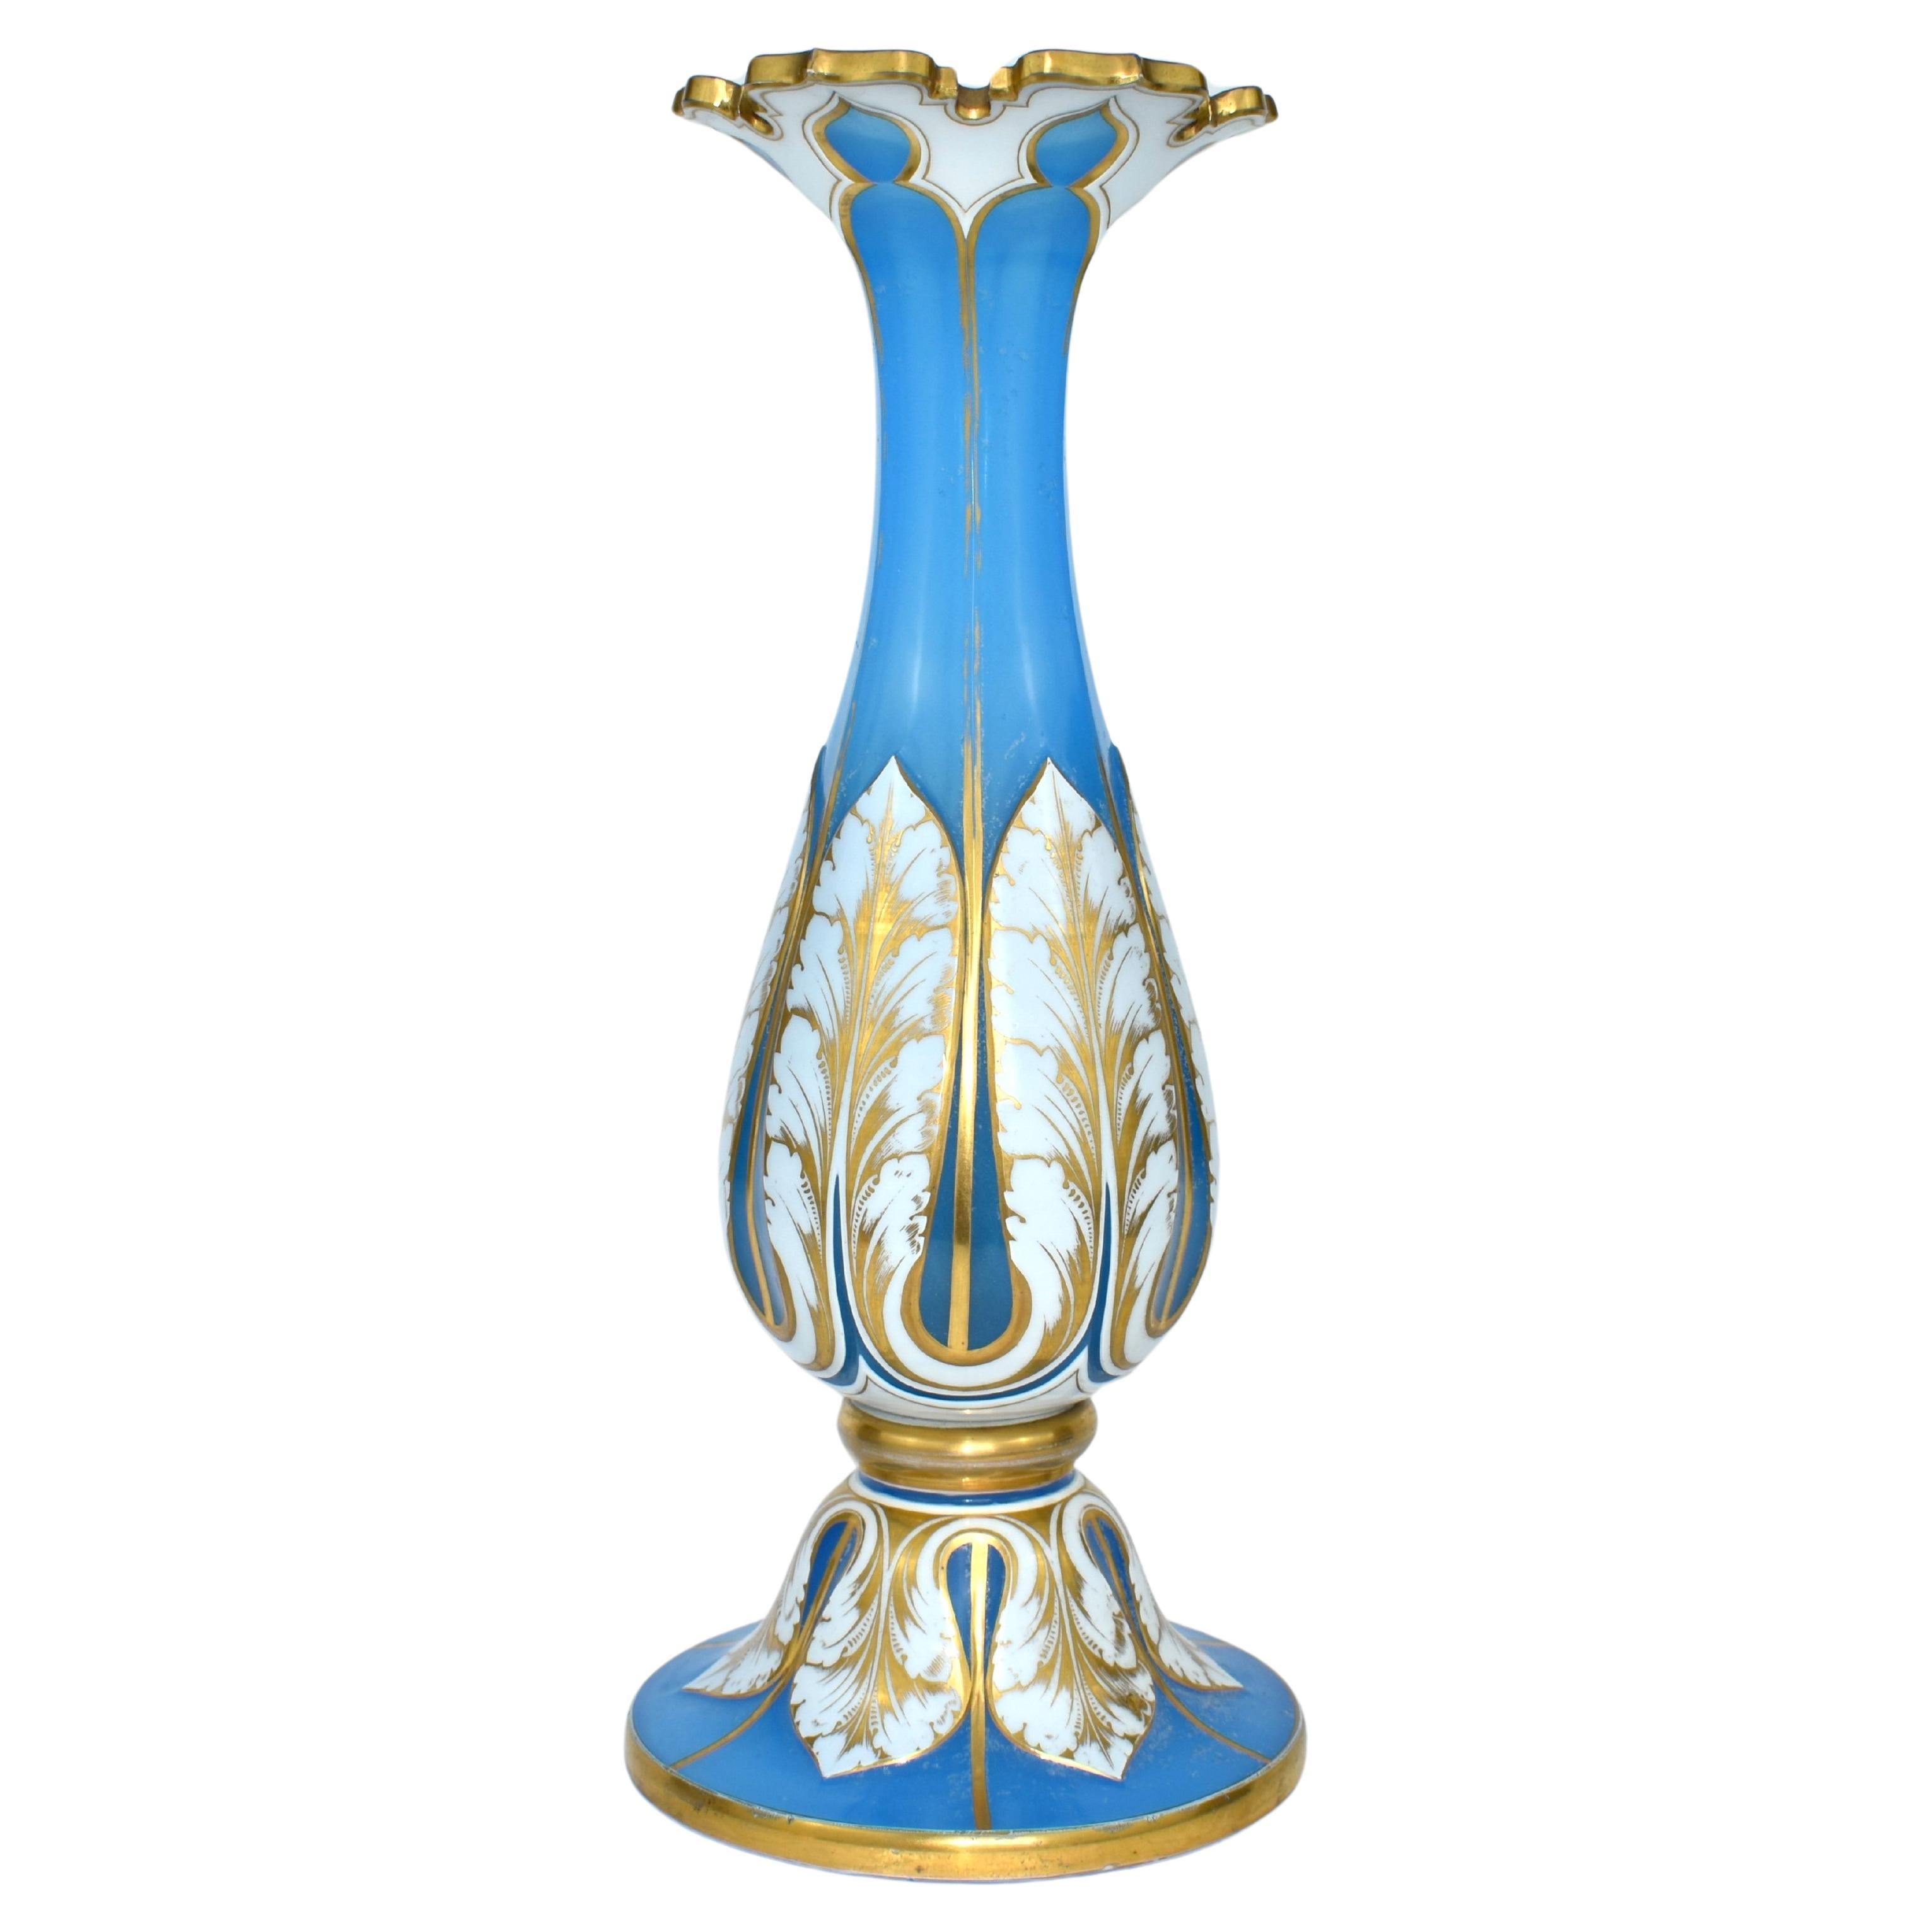 ANTIQUE BOHEMIAN DOUBLE OVERLAY CUT-GLASS VASE, 19th CENTURY